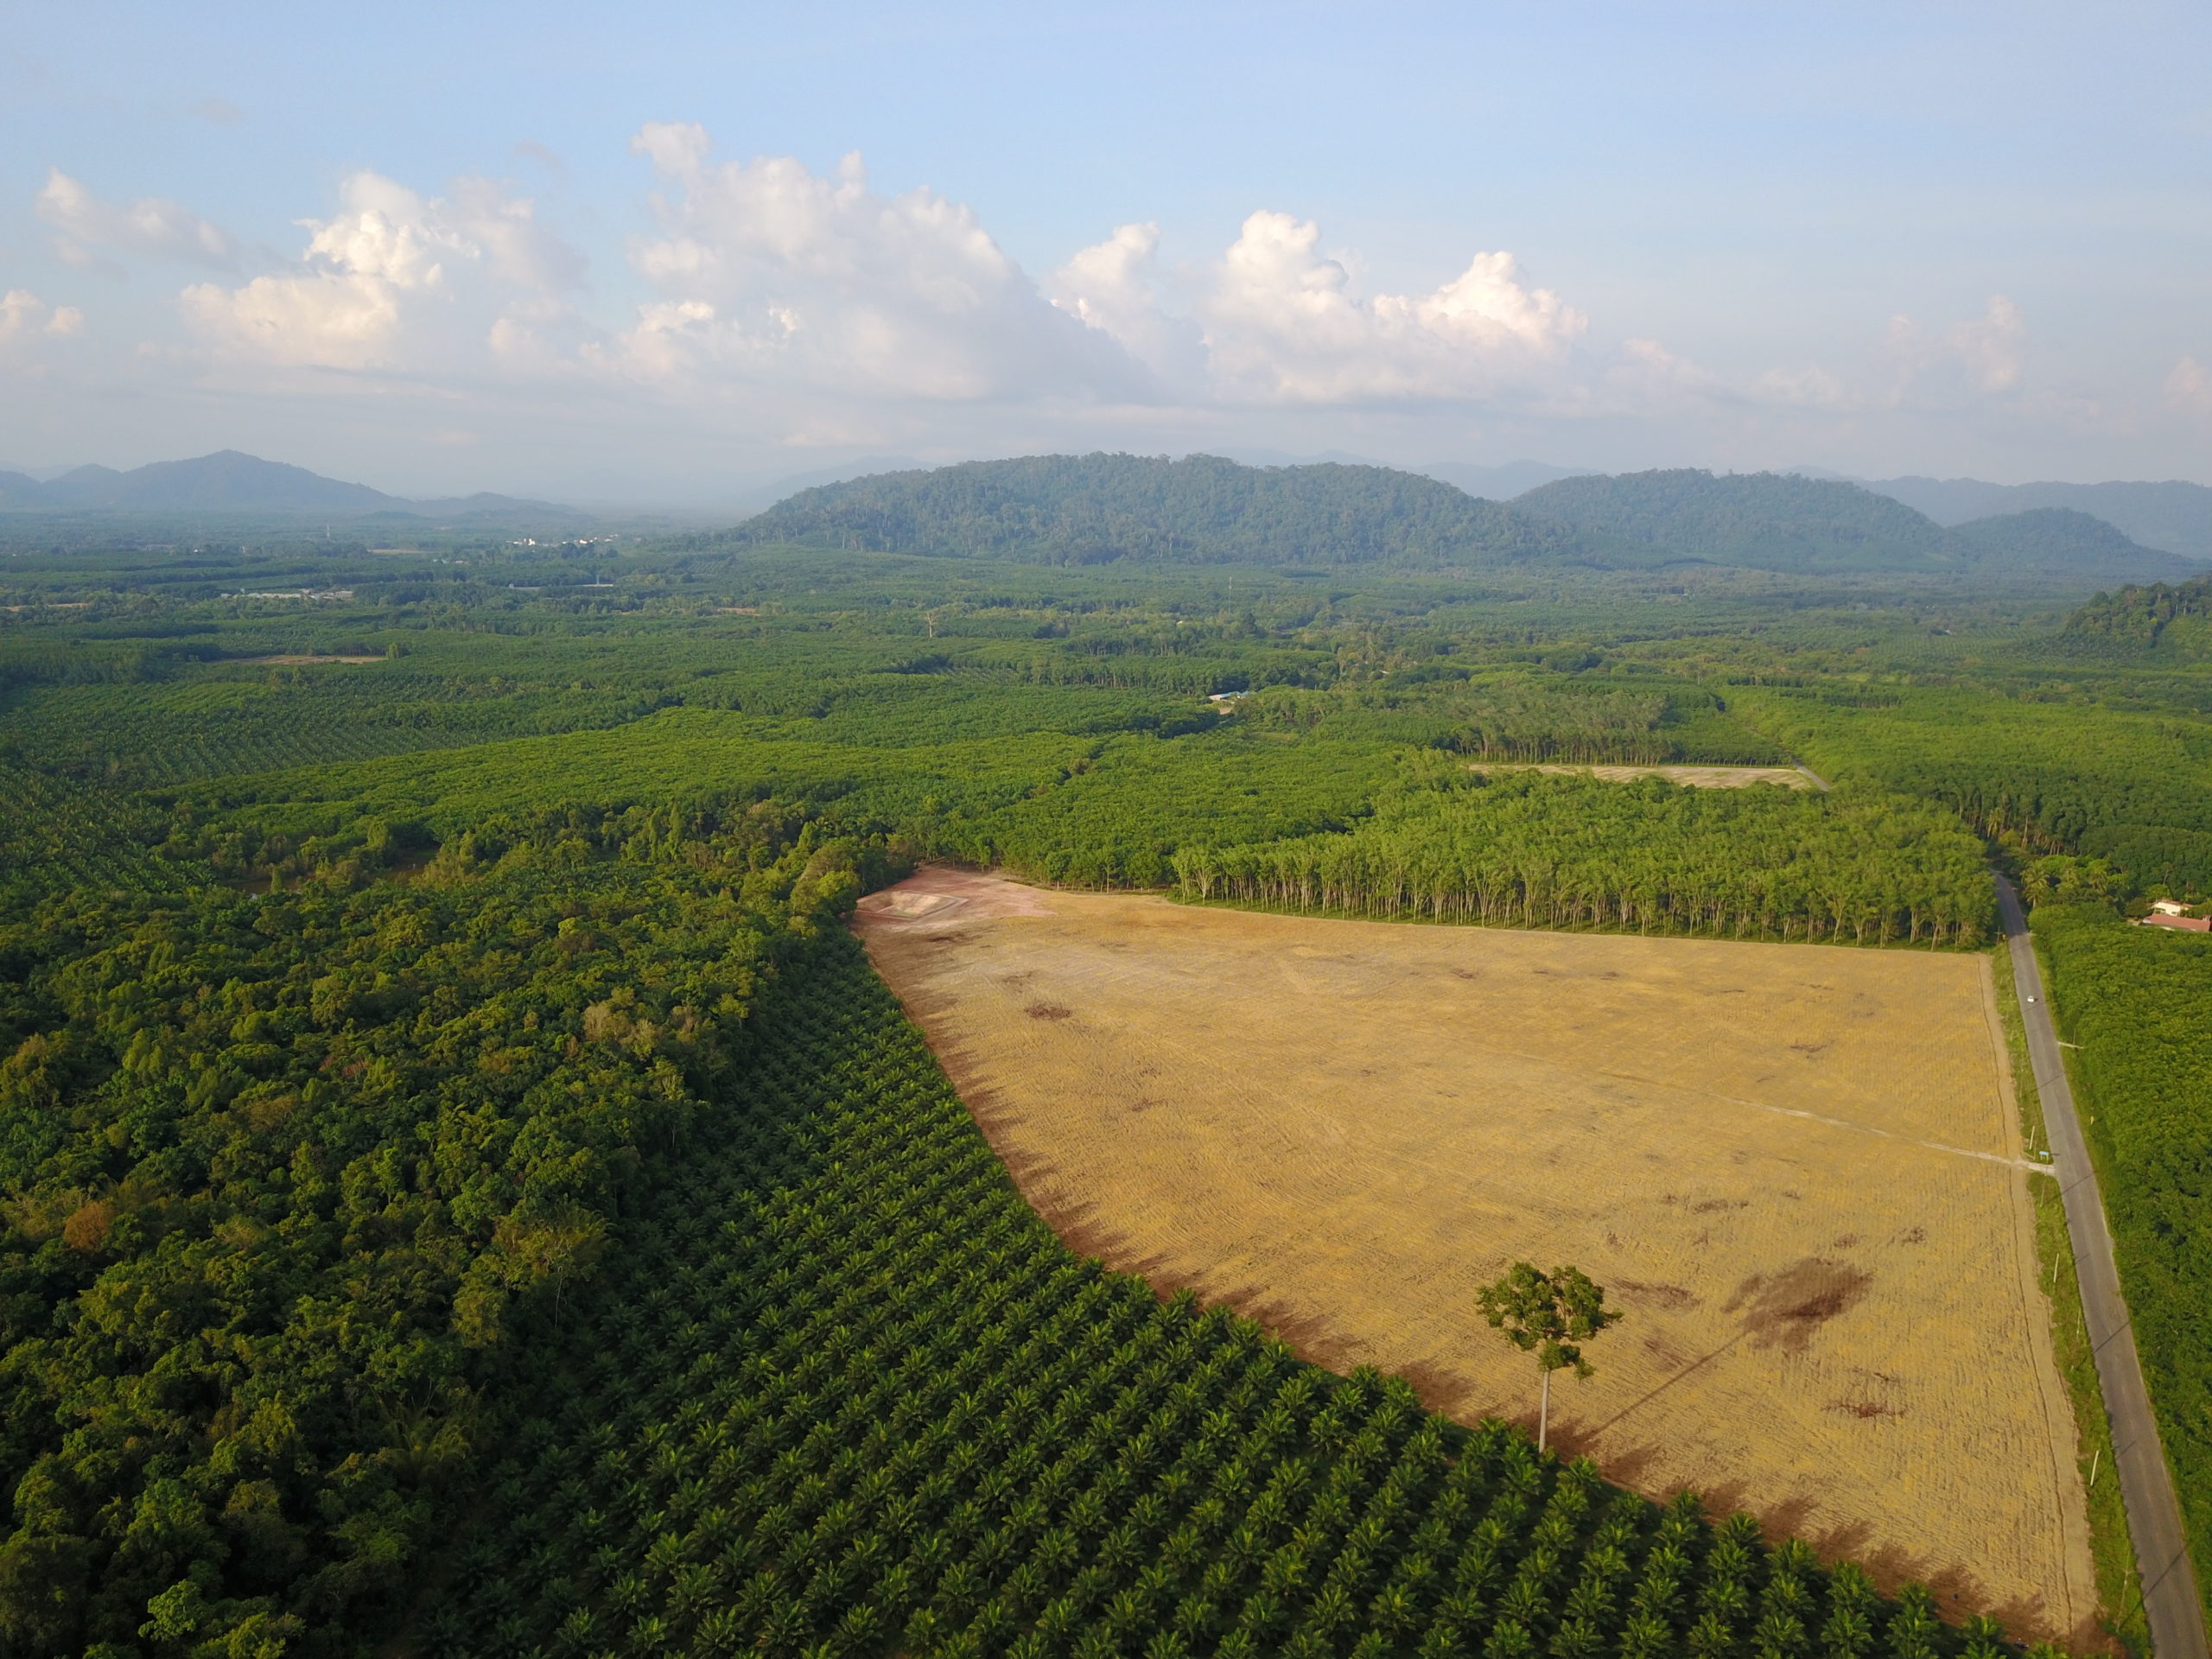 The production landscape of South Sumatra